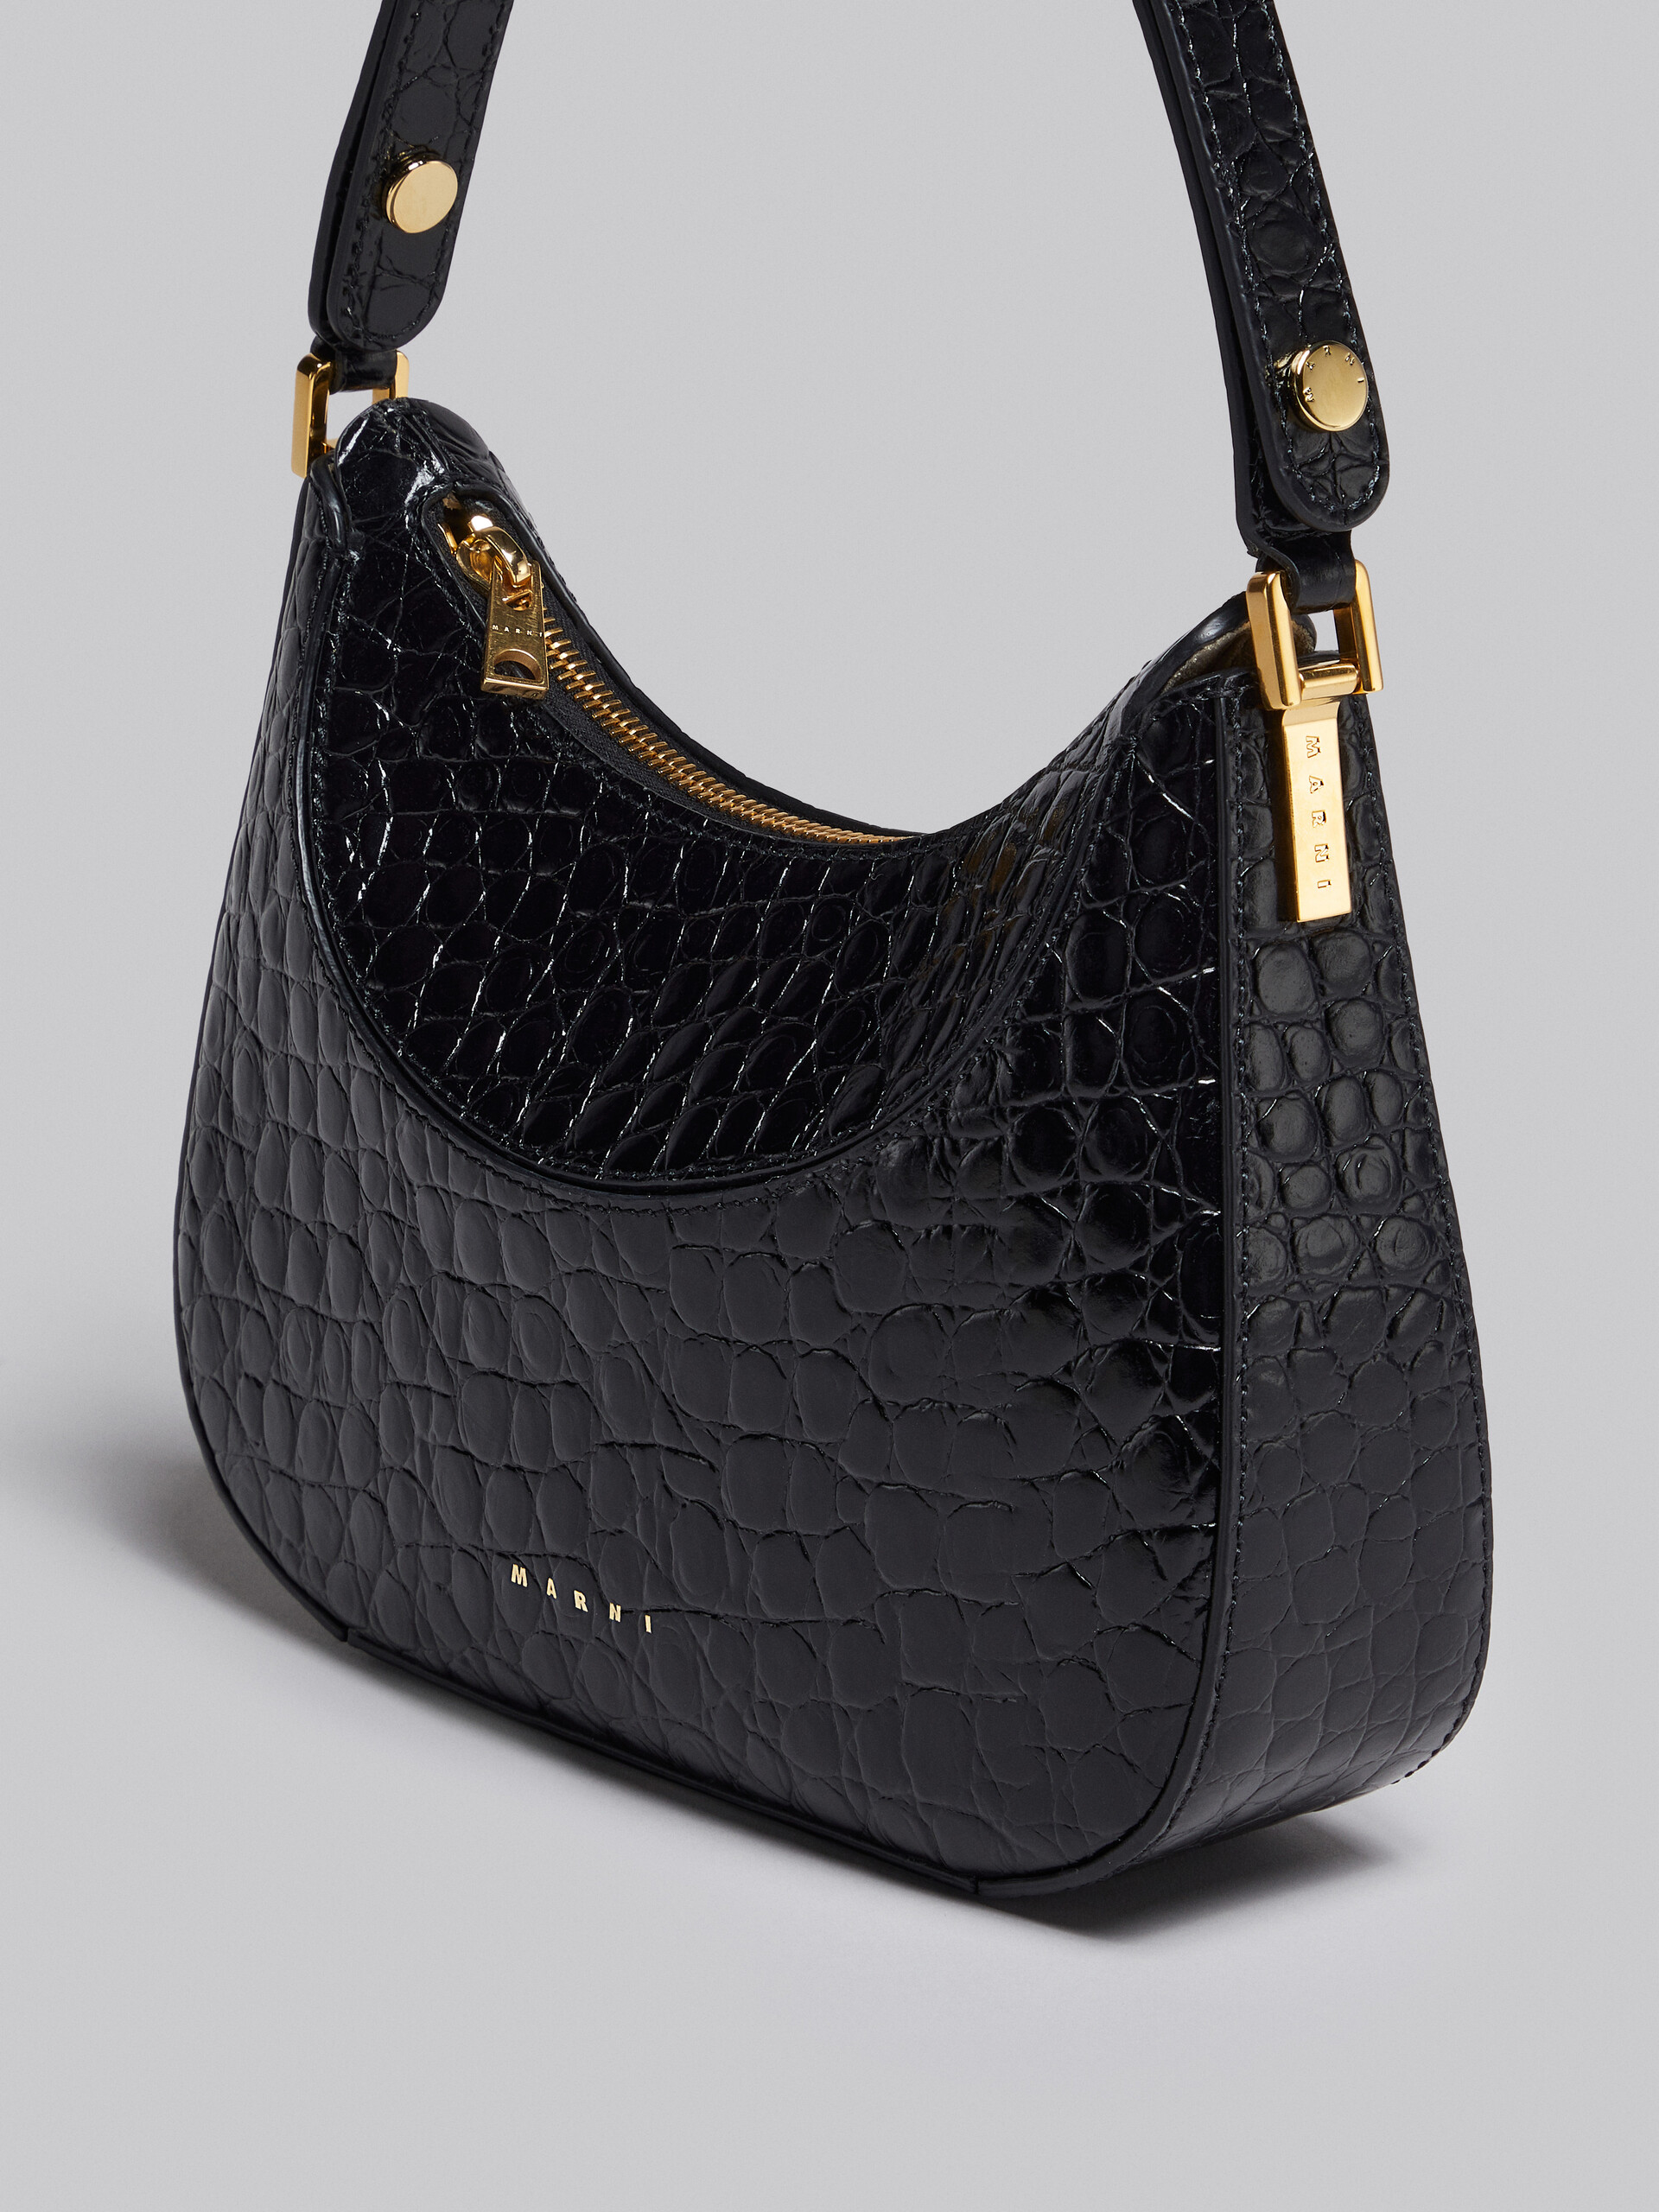 Milano Mini Bag in black croco print leather - Handbag - Image 4